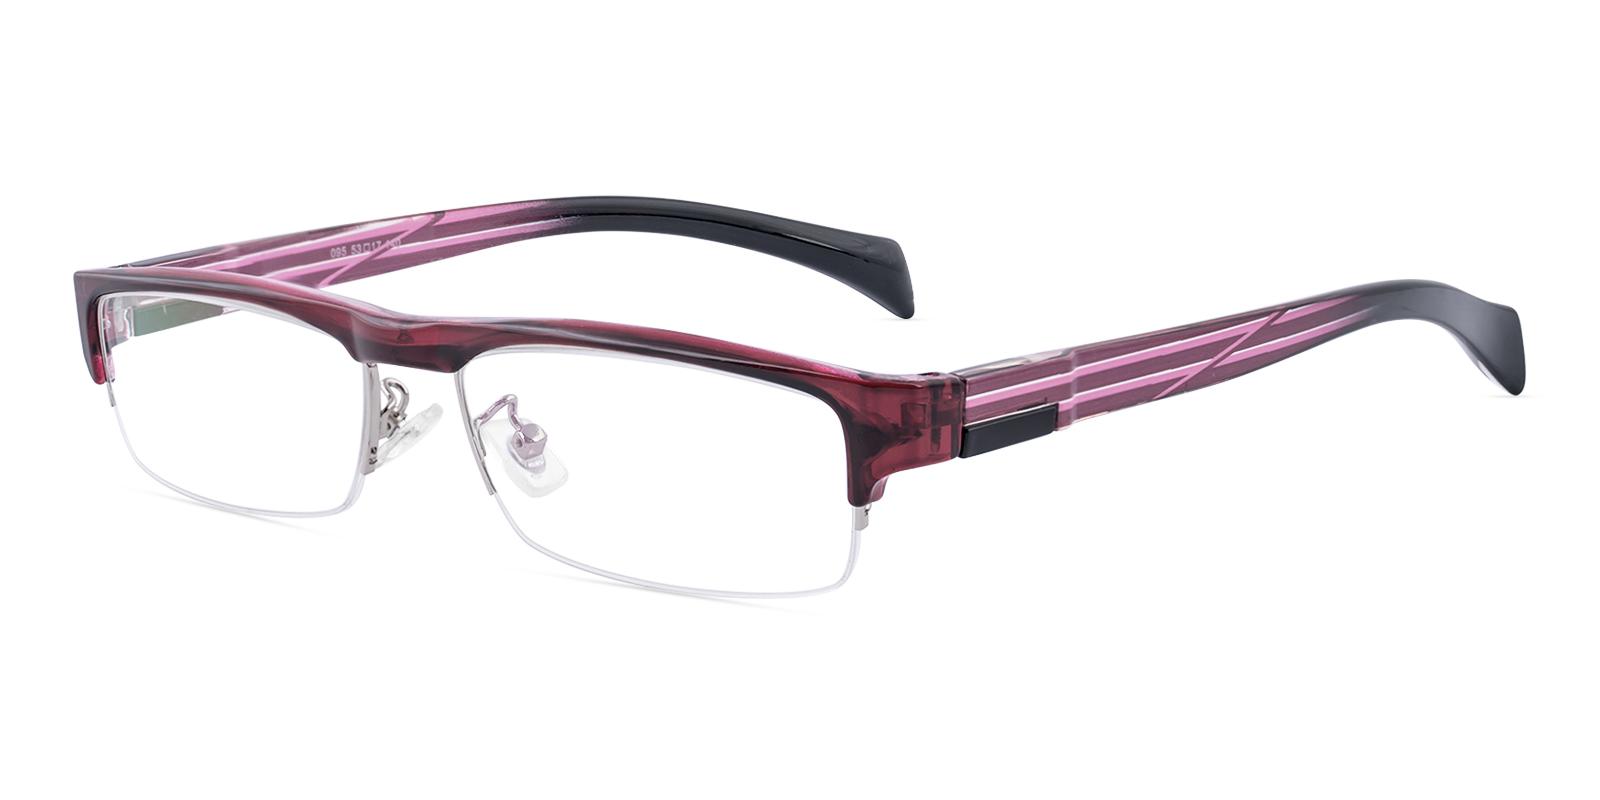 Doorling Red TR Eyeglasses , NosePads Frames from ABBE Glasses